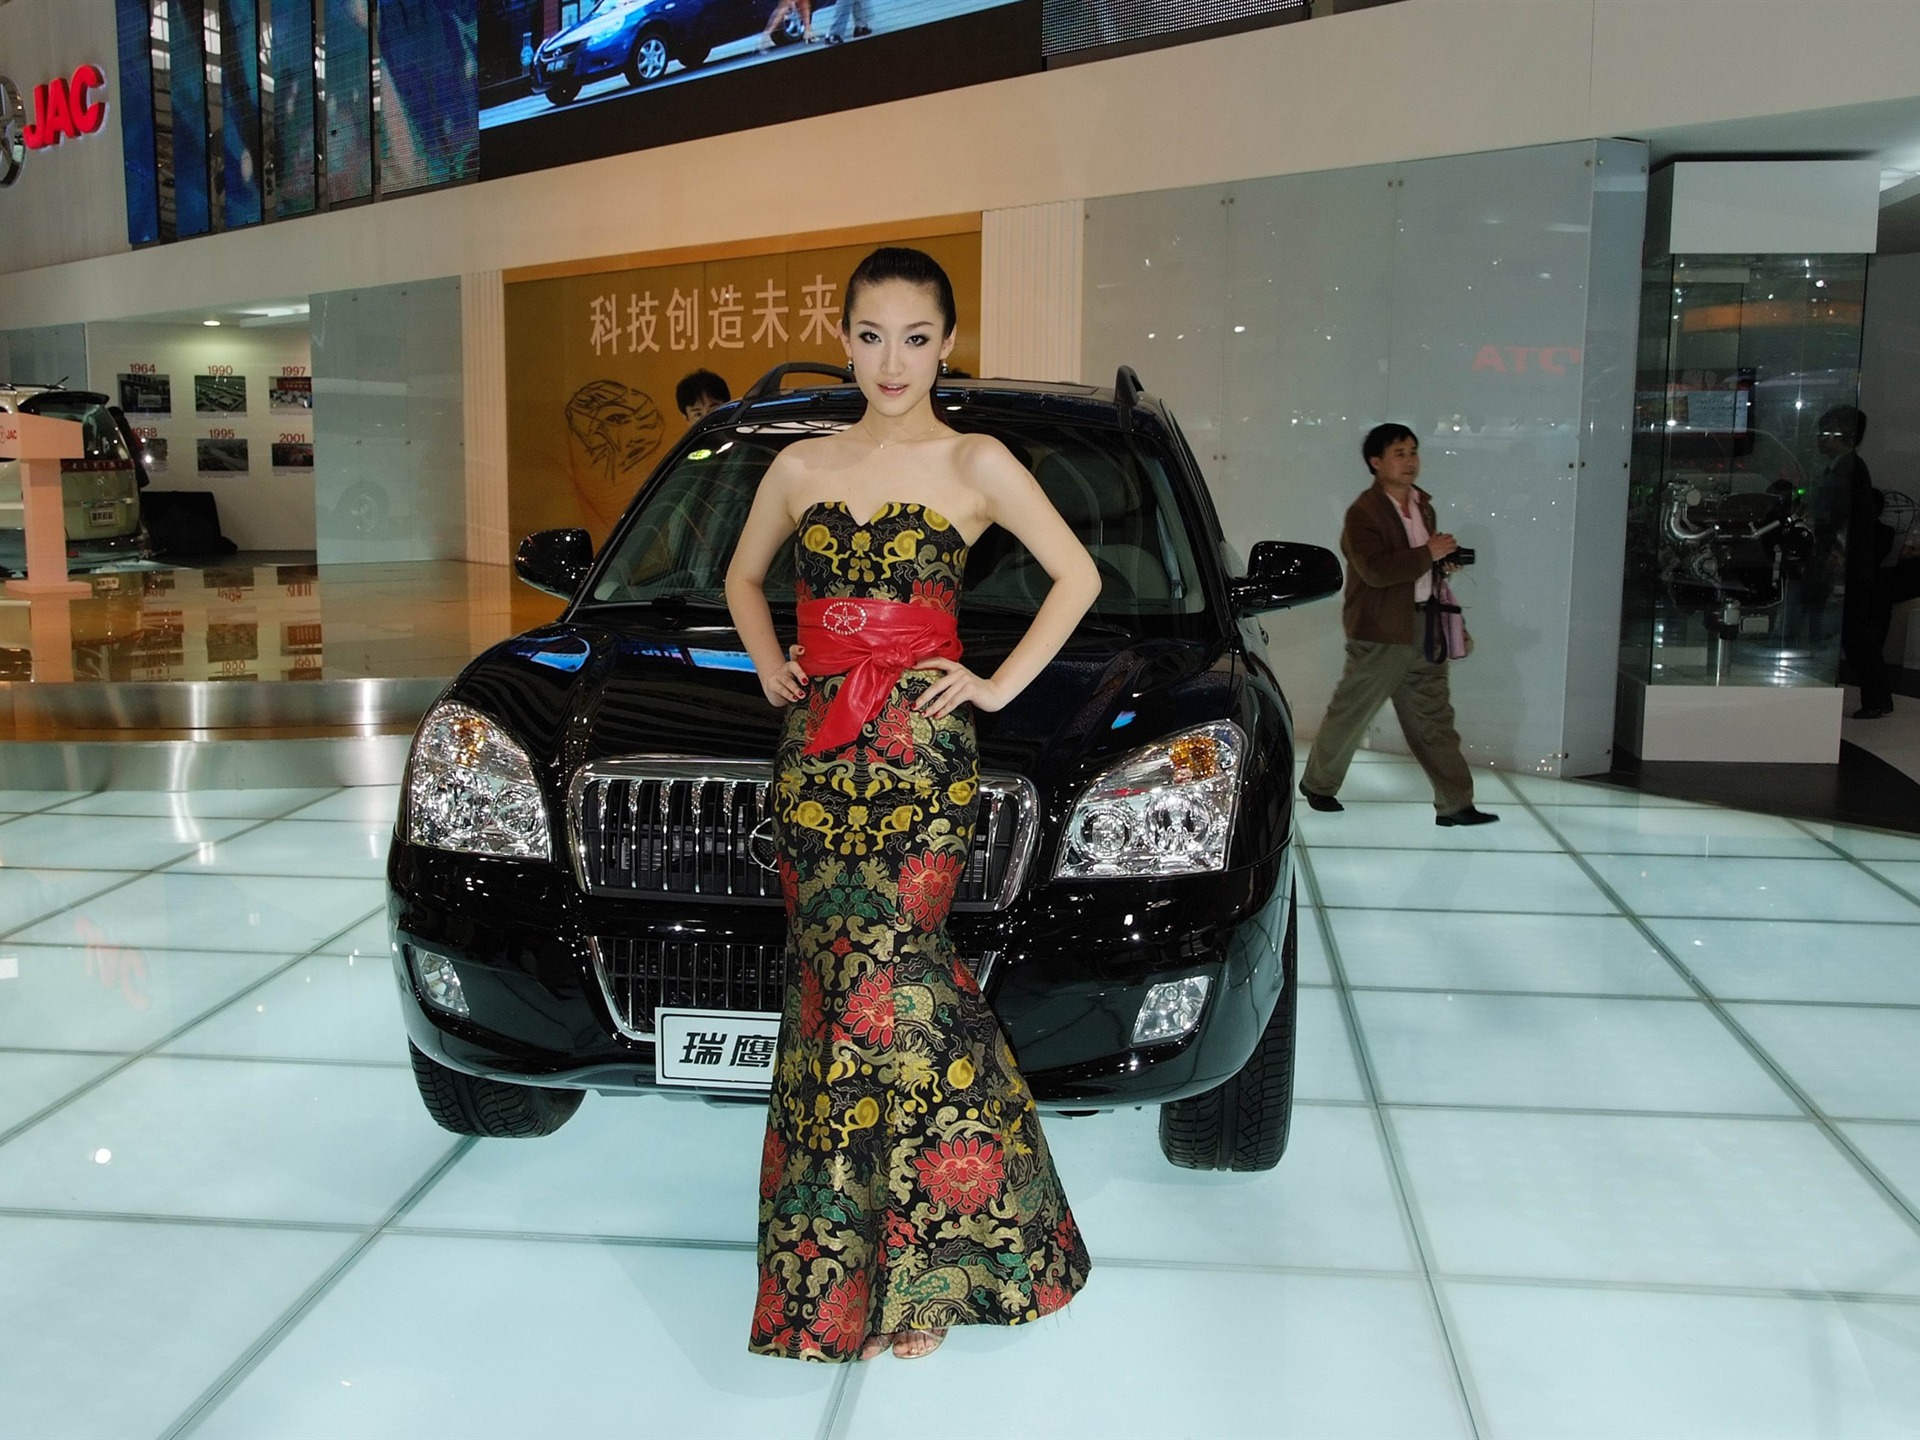 2010 Salón Internacional del Automóvil de Beijing Heung Che belleza (obras barras de refuerzo) #4 - 1920x1440